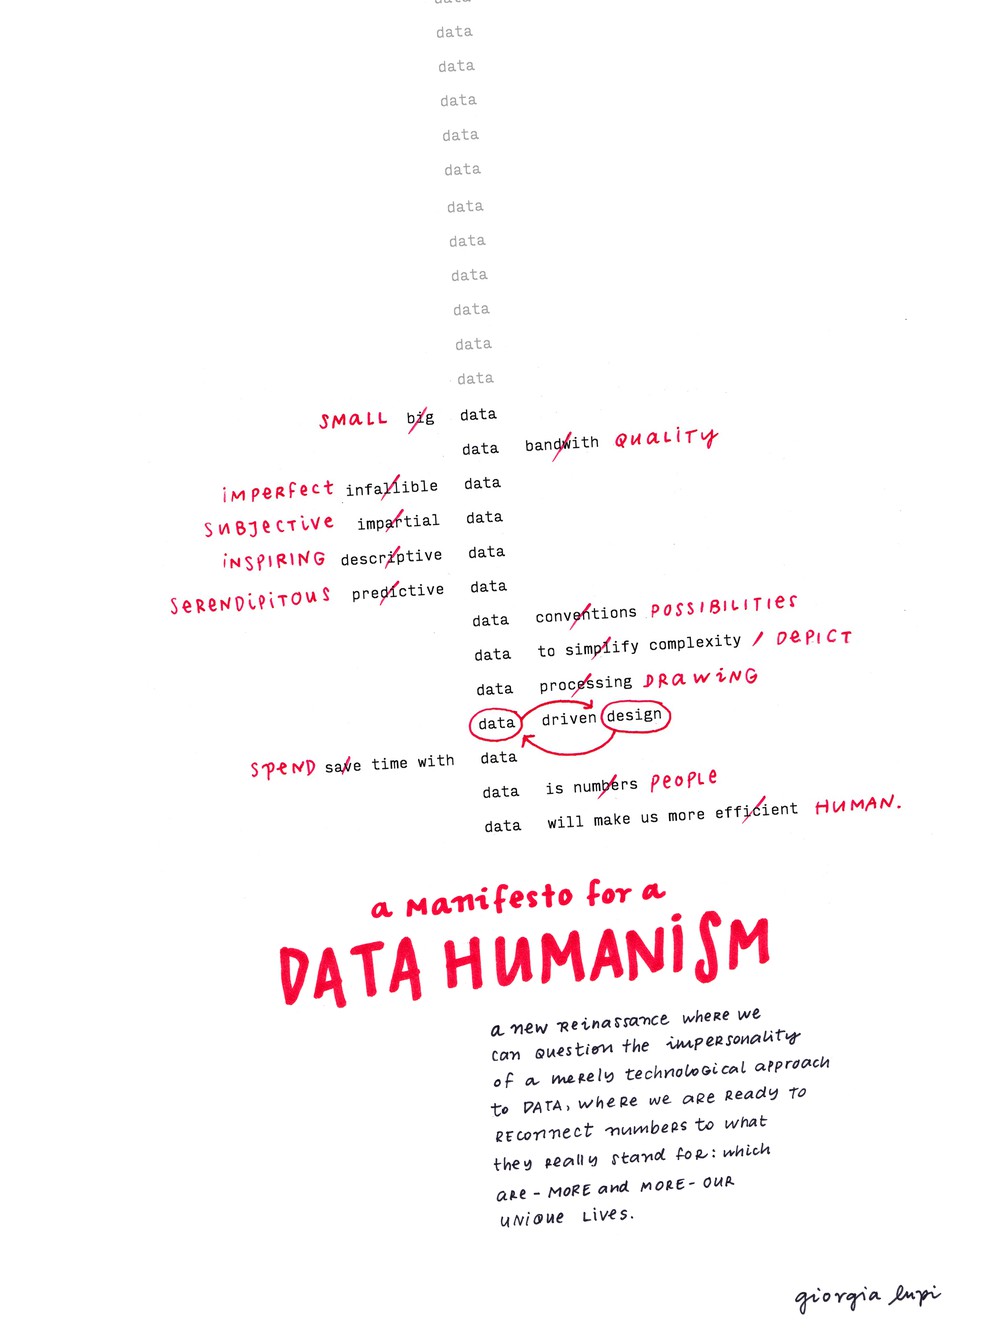 Data Humanism